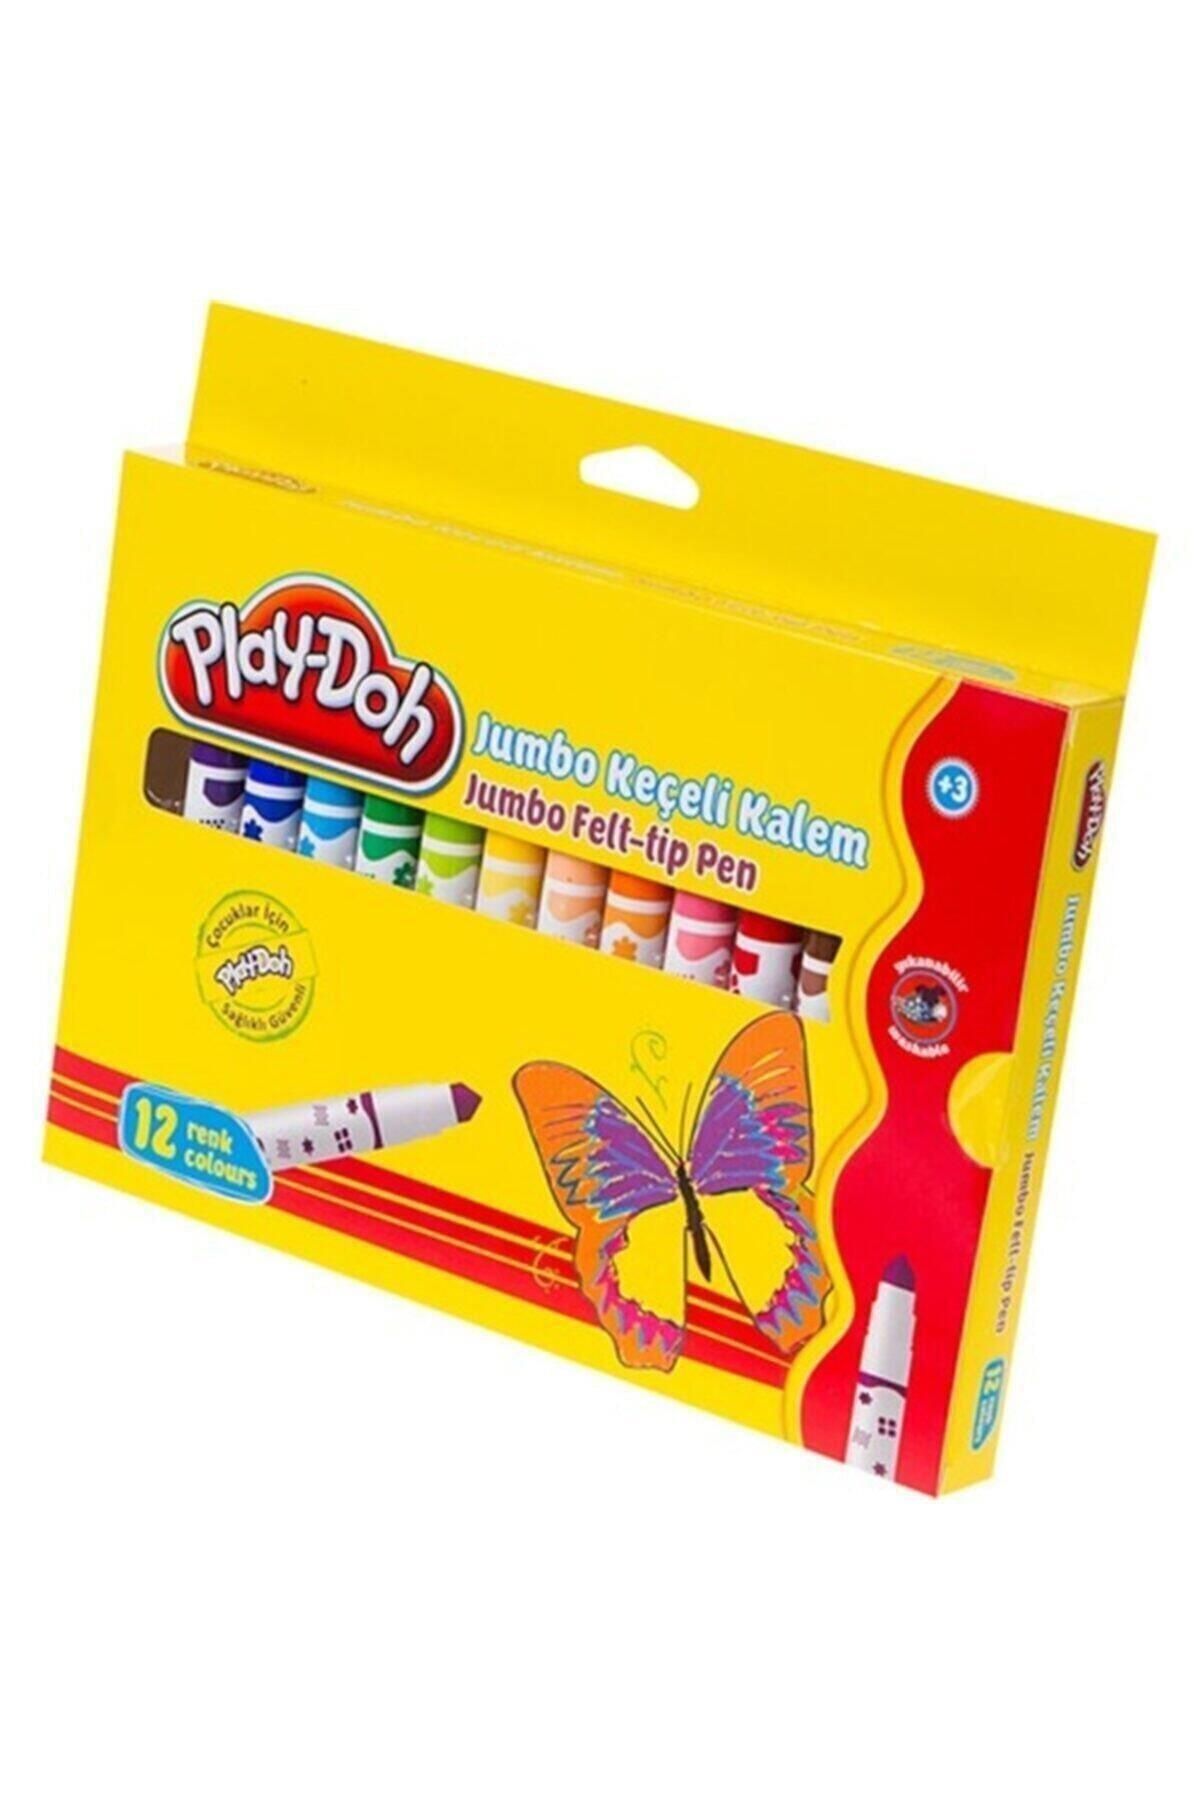 Play Doh Play-doh Keçeli Kalem Jumbo 6 Mm 12 Renk Jumbo Keçeli Kalem